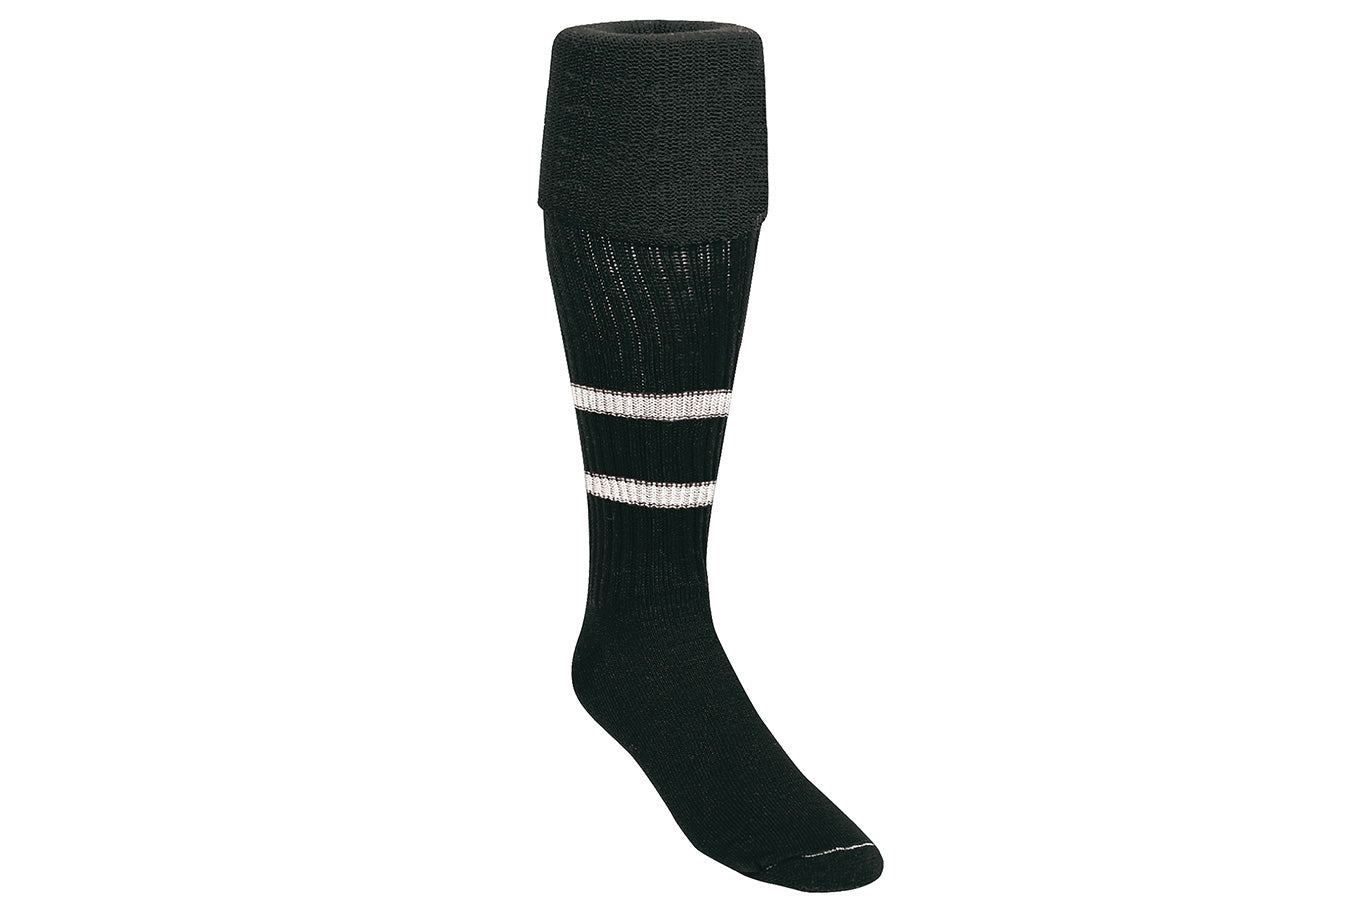 Kwikgoal Referee Sock 2 Stripe Black/White